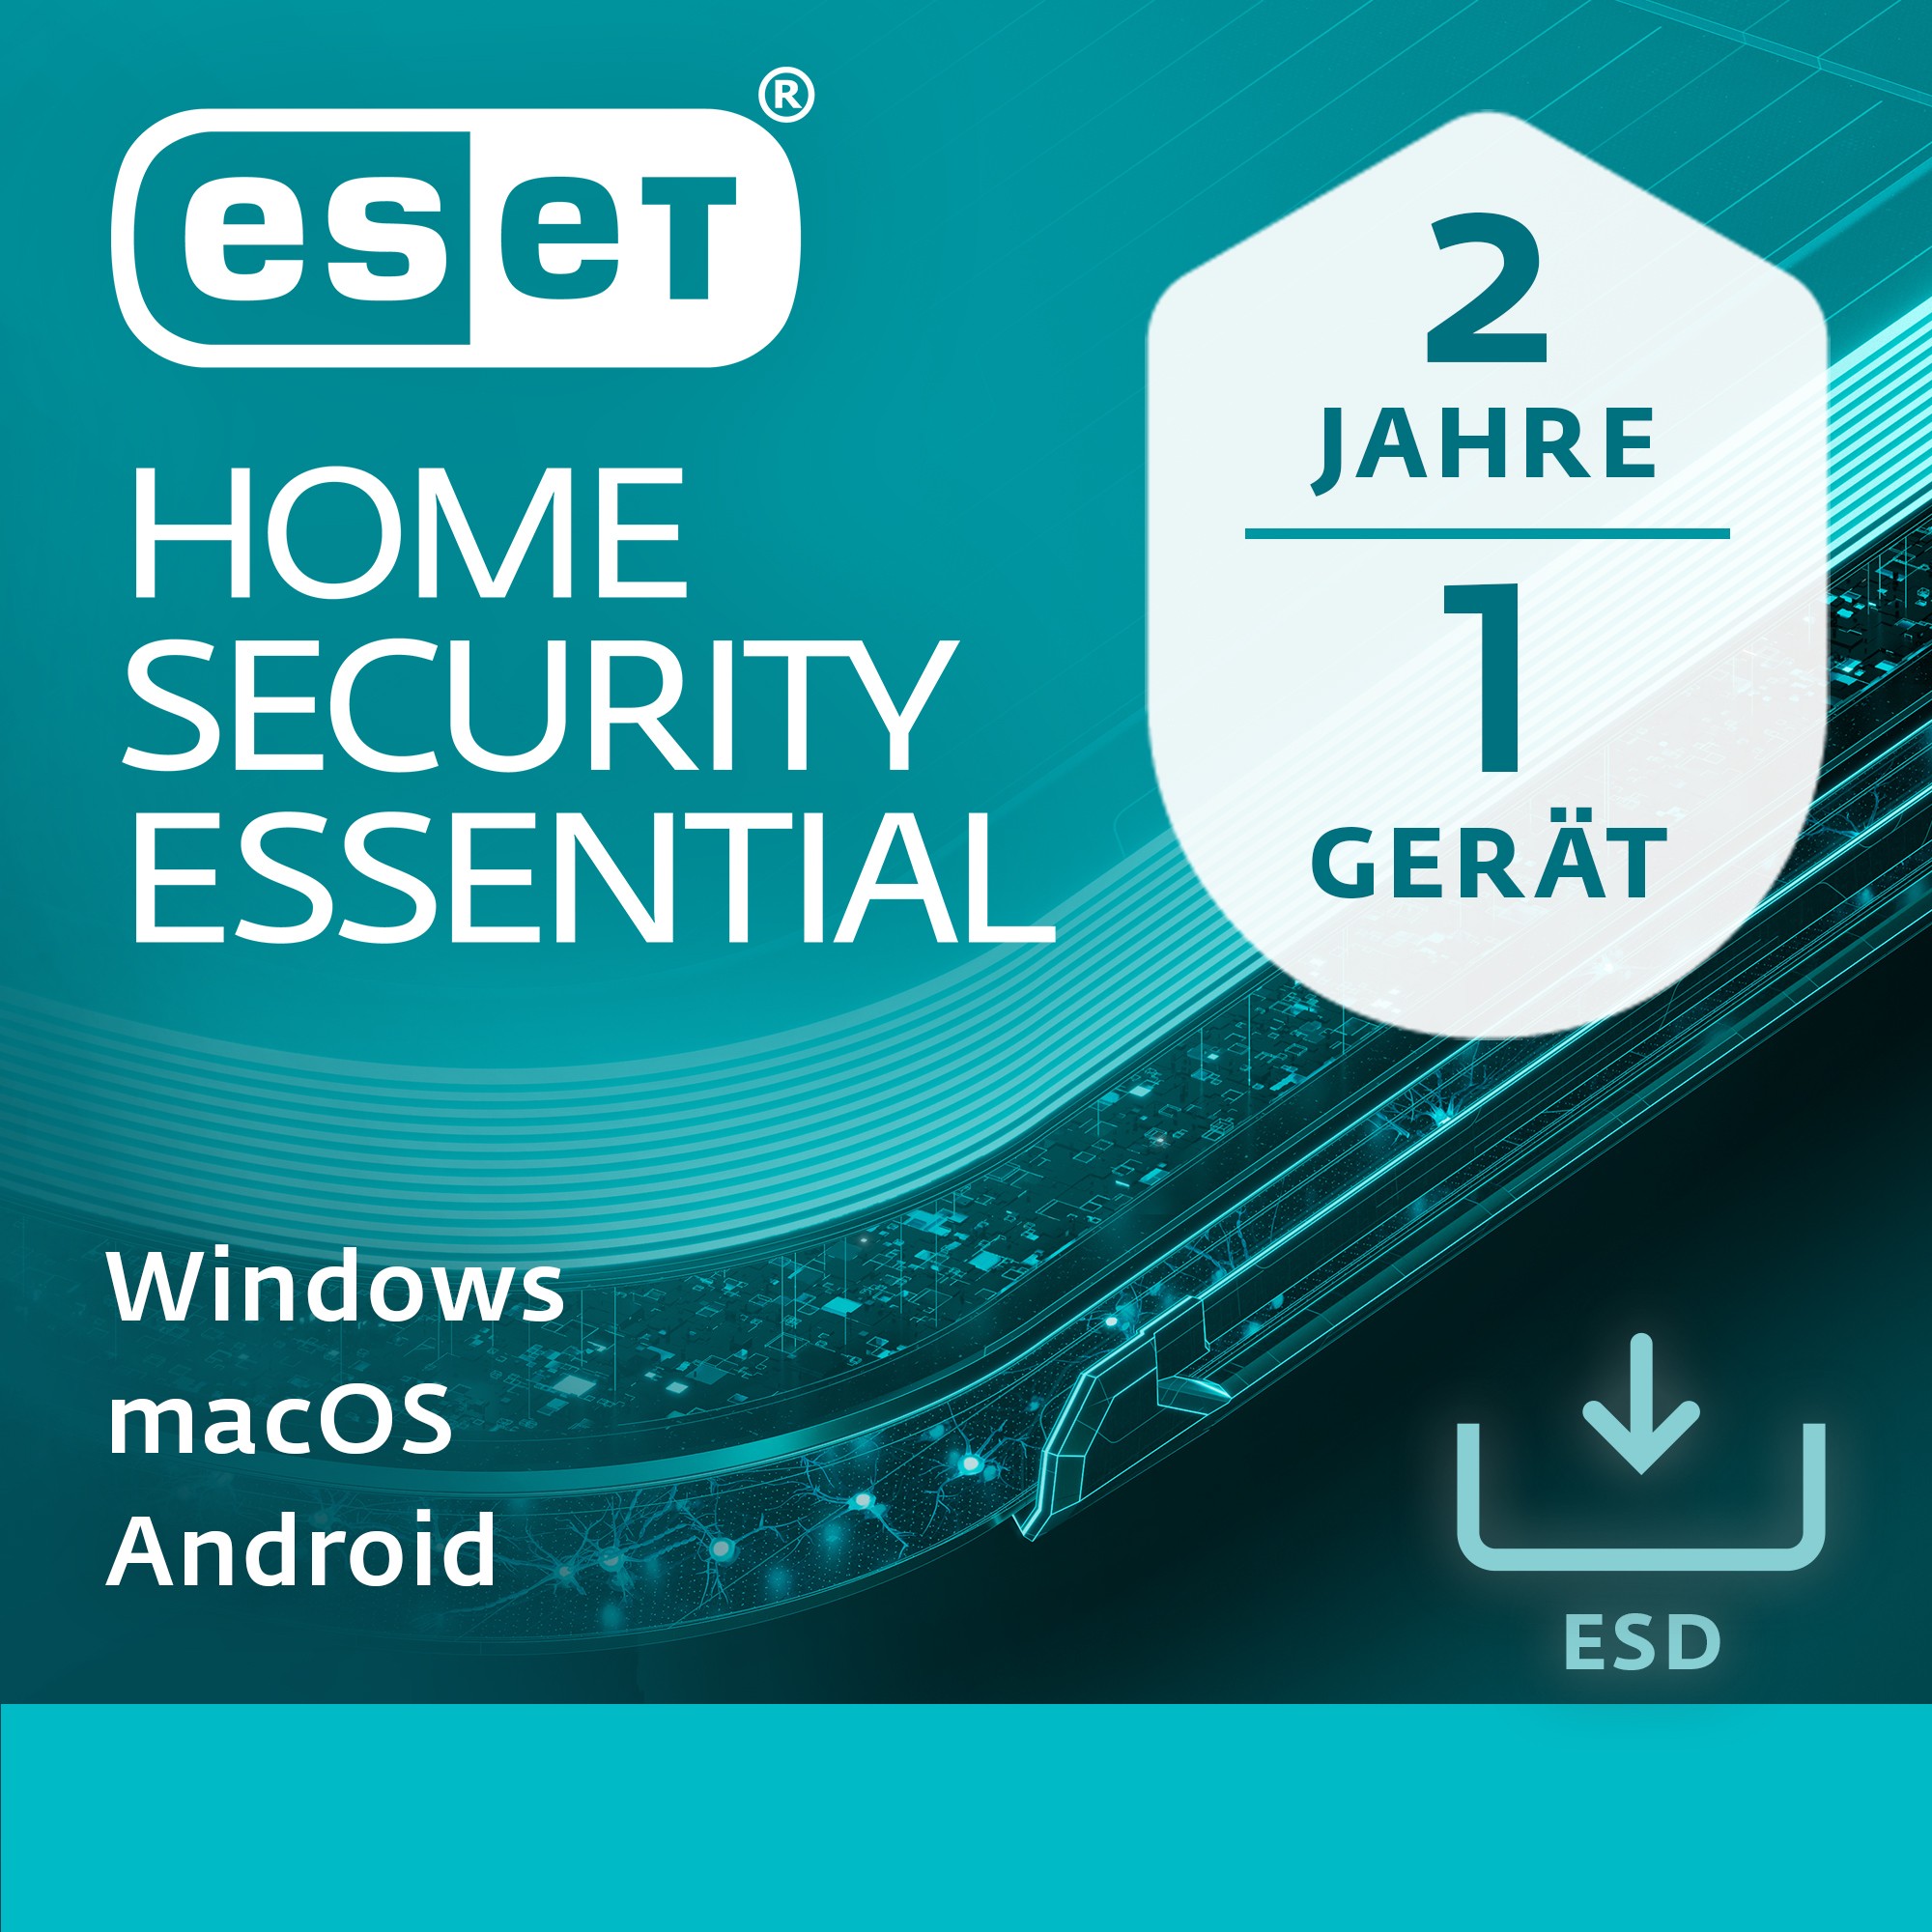 ESET EHSE-N2A1-VAKT-E, ESD-Lizenzen, ESET Home Security  (BILD1)